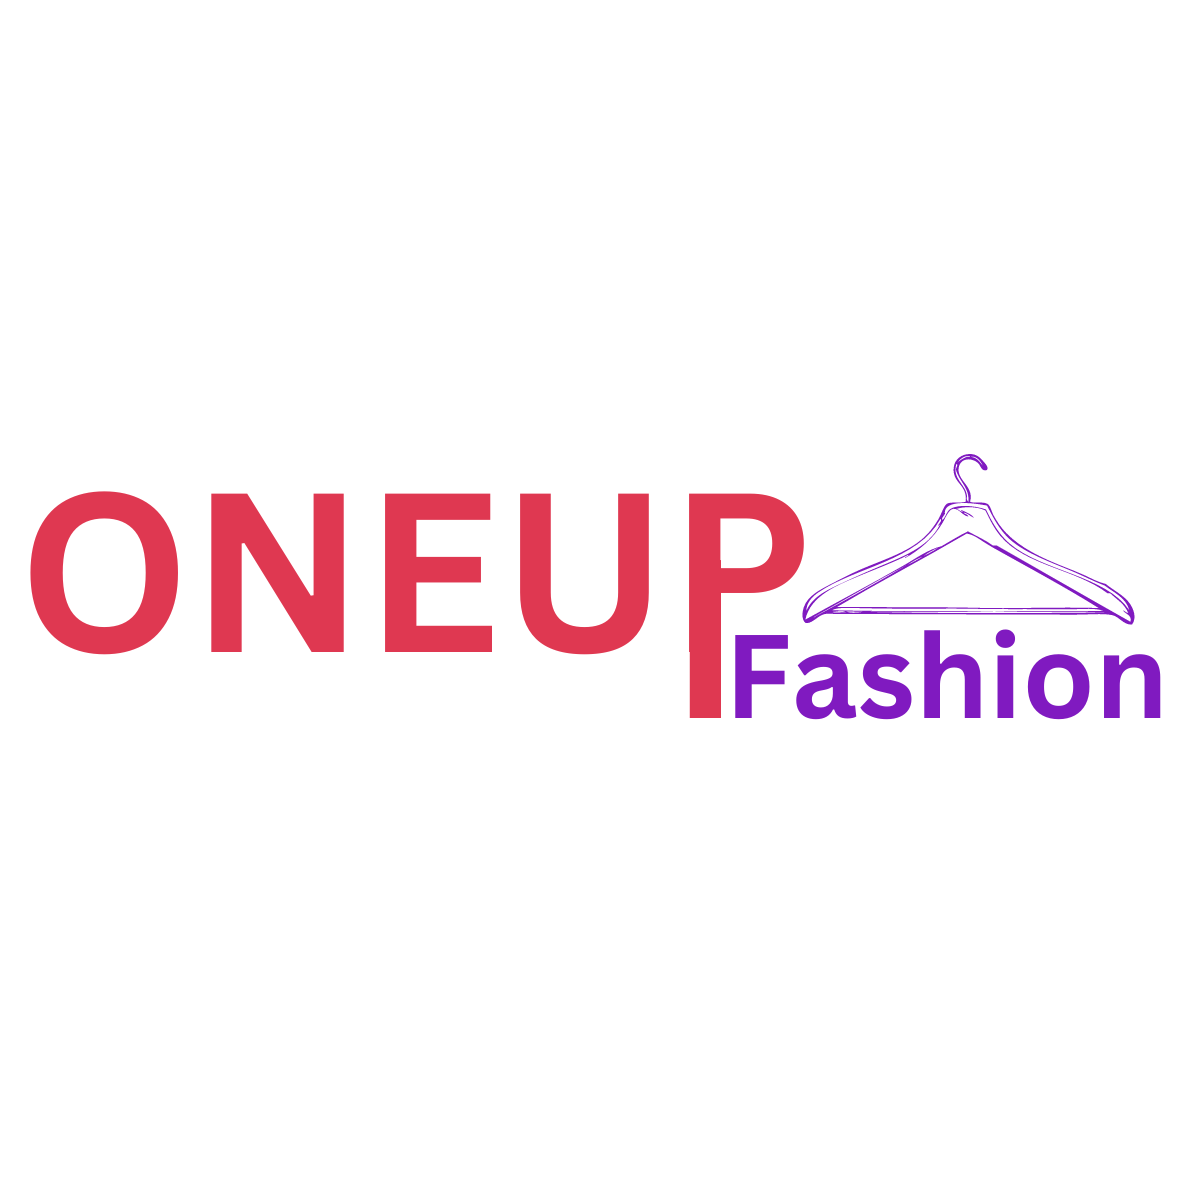 OneUp Fashion